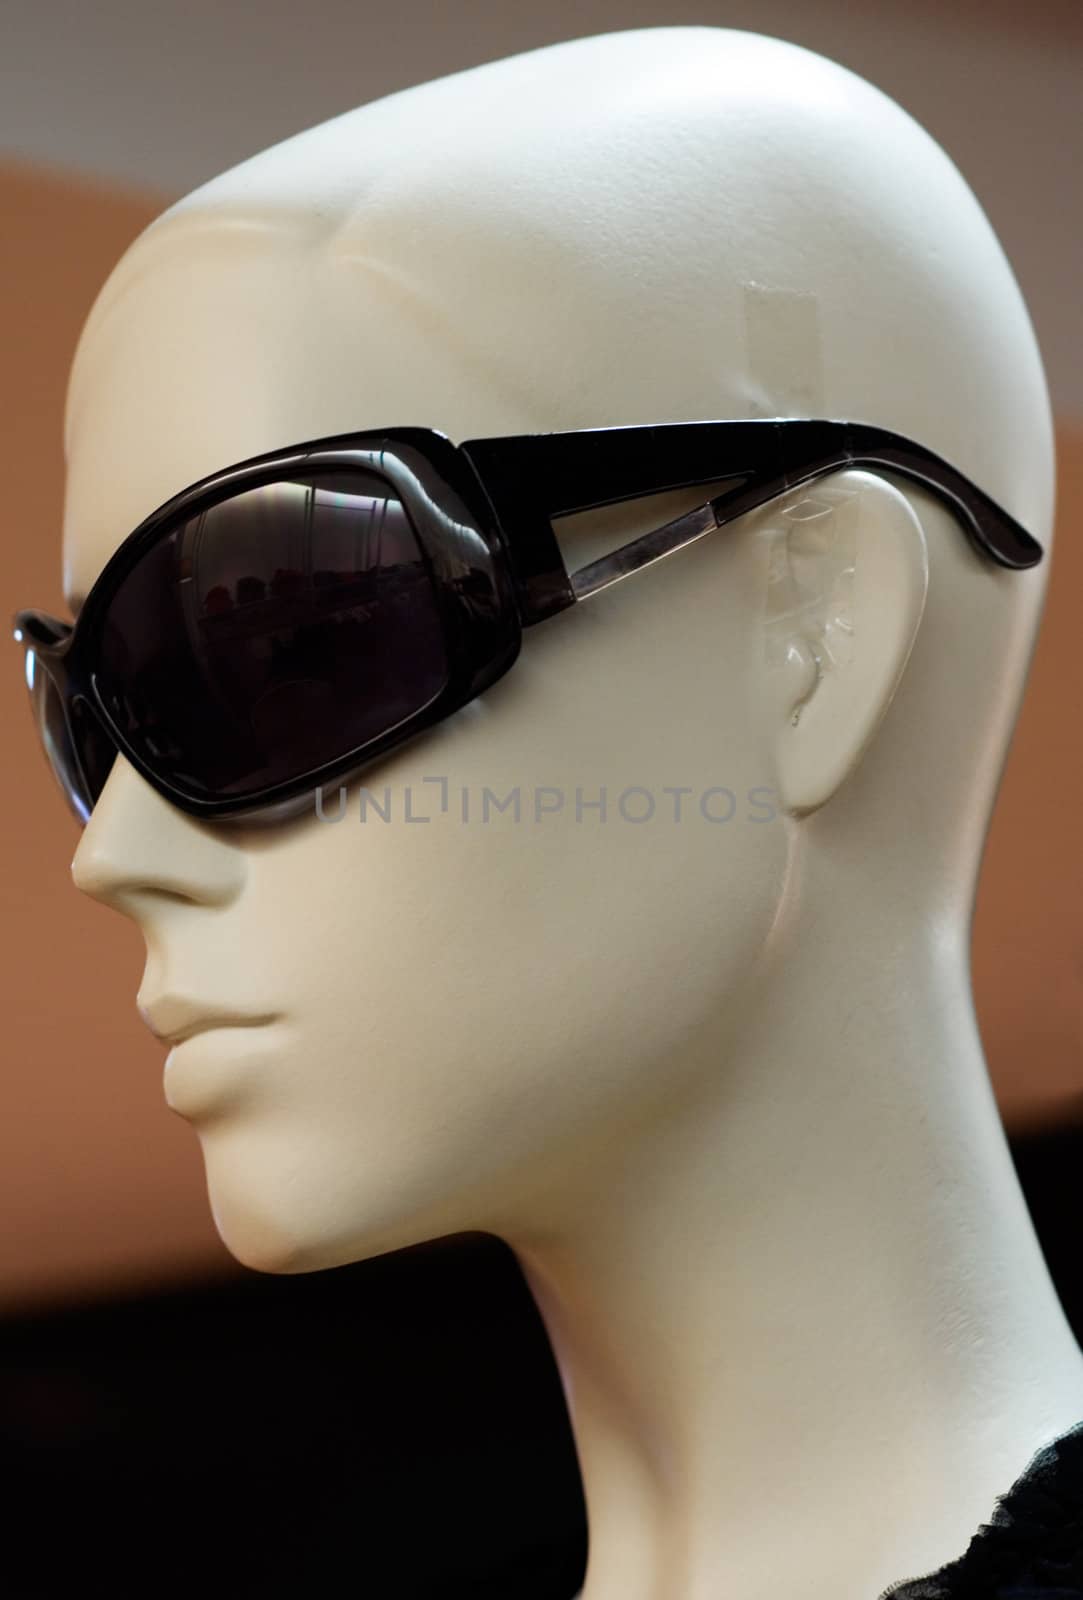 Shop window dummy wearing black sunglasses.